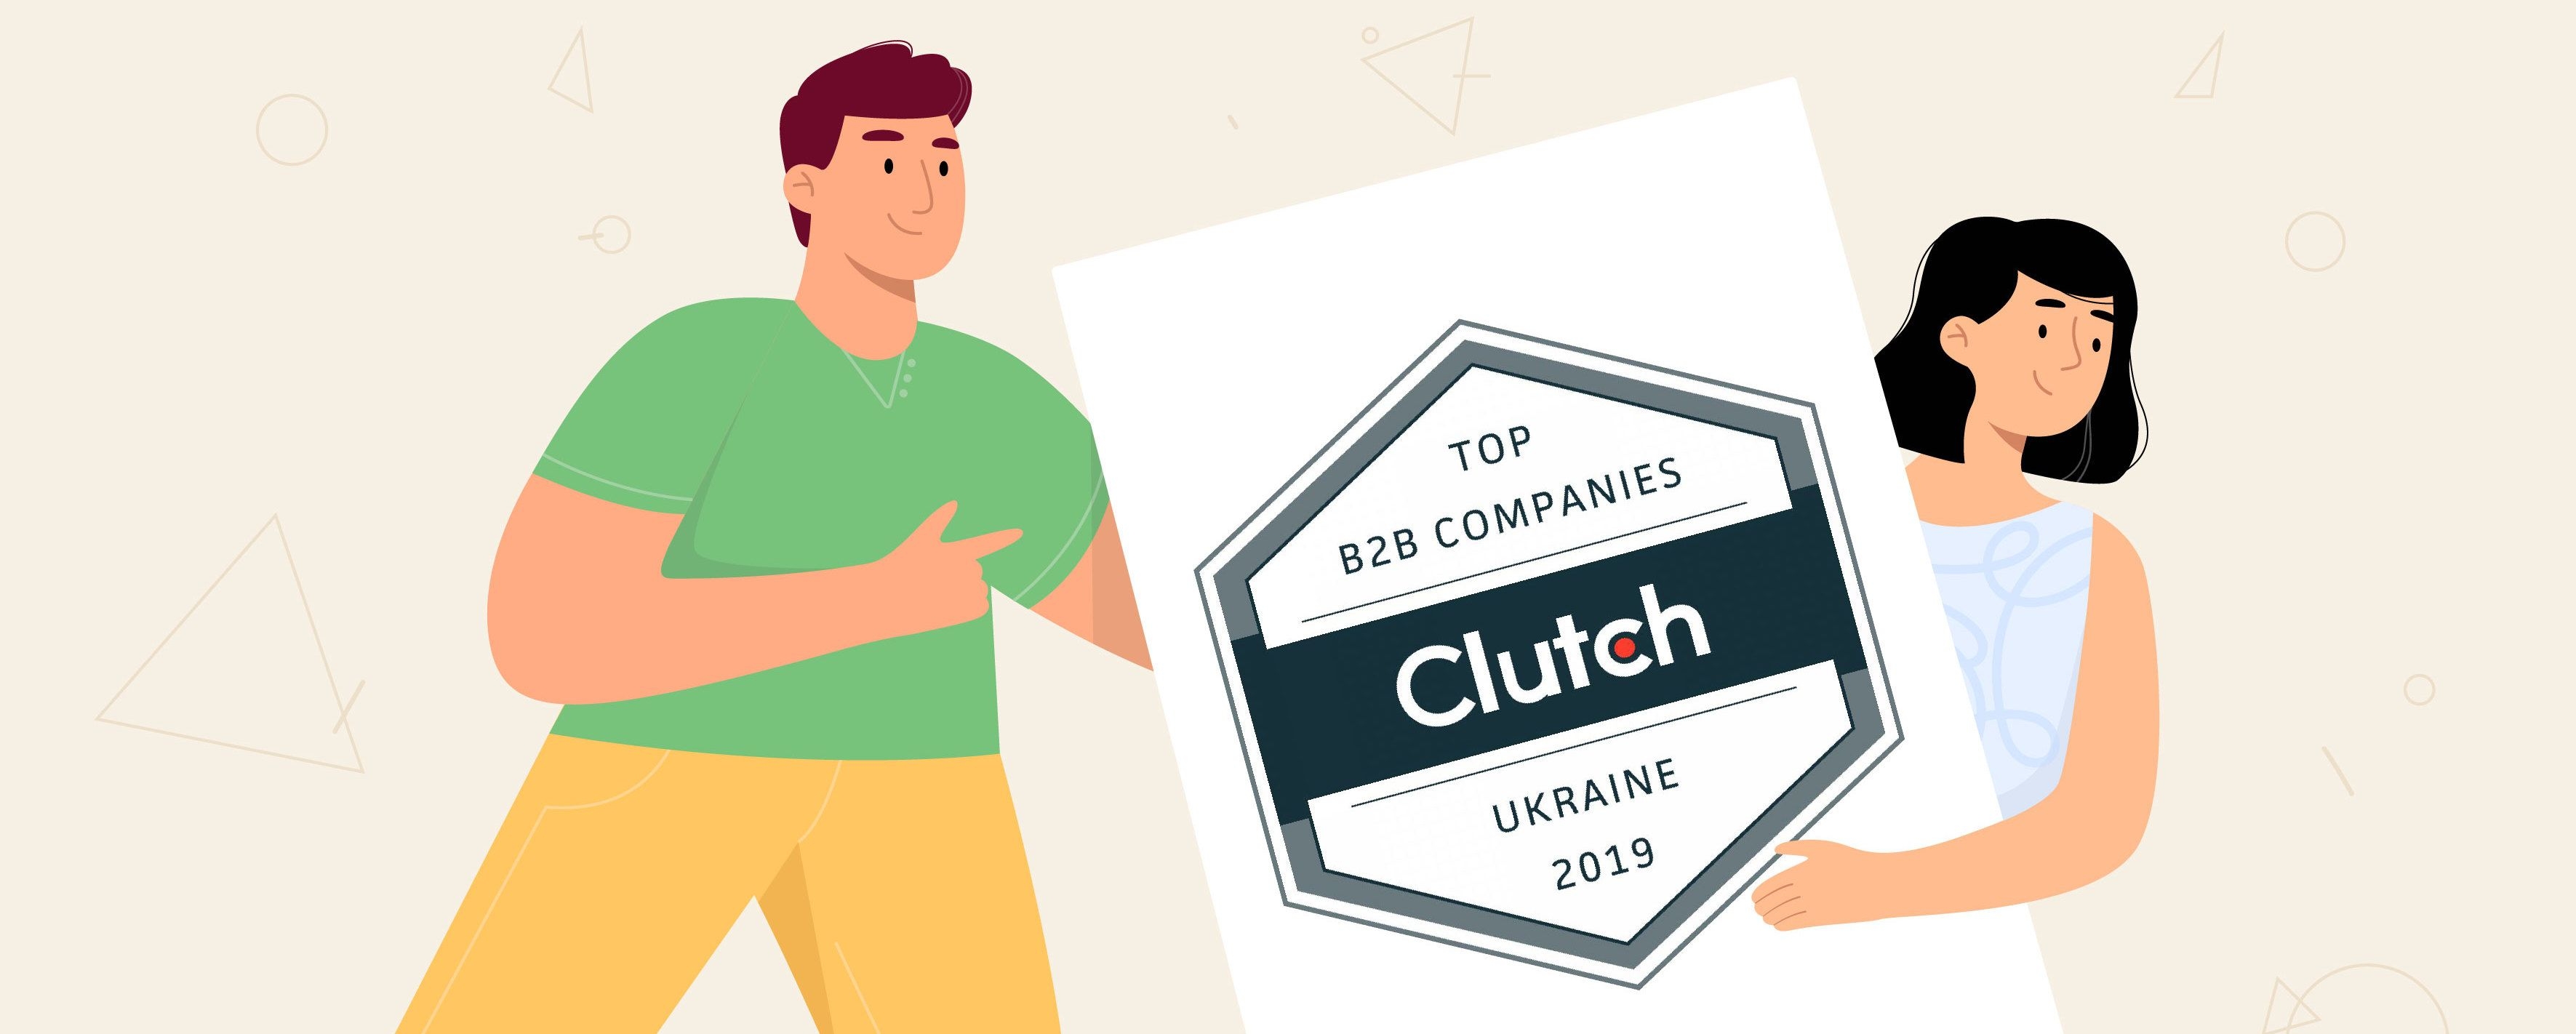 Top B2B companies by Clutch